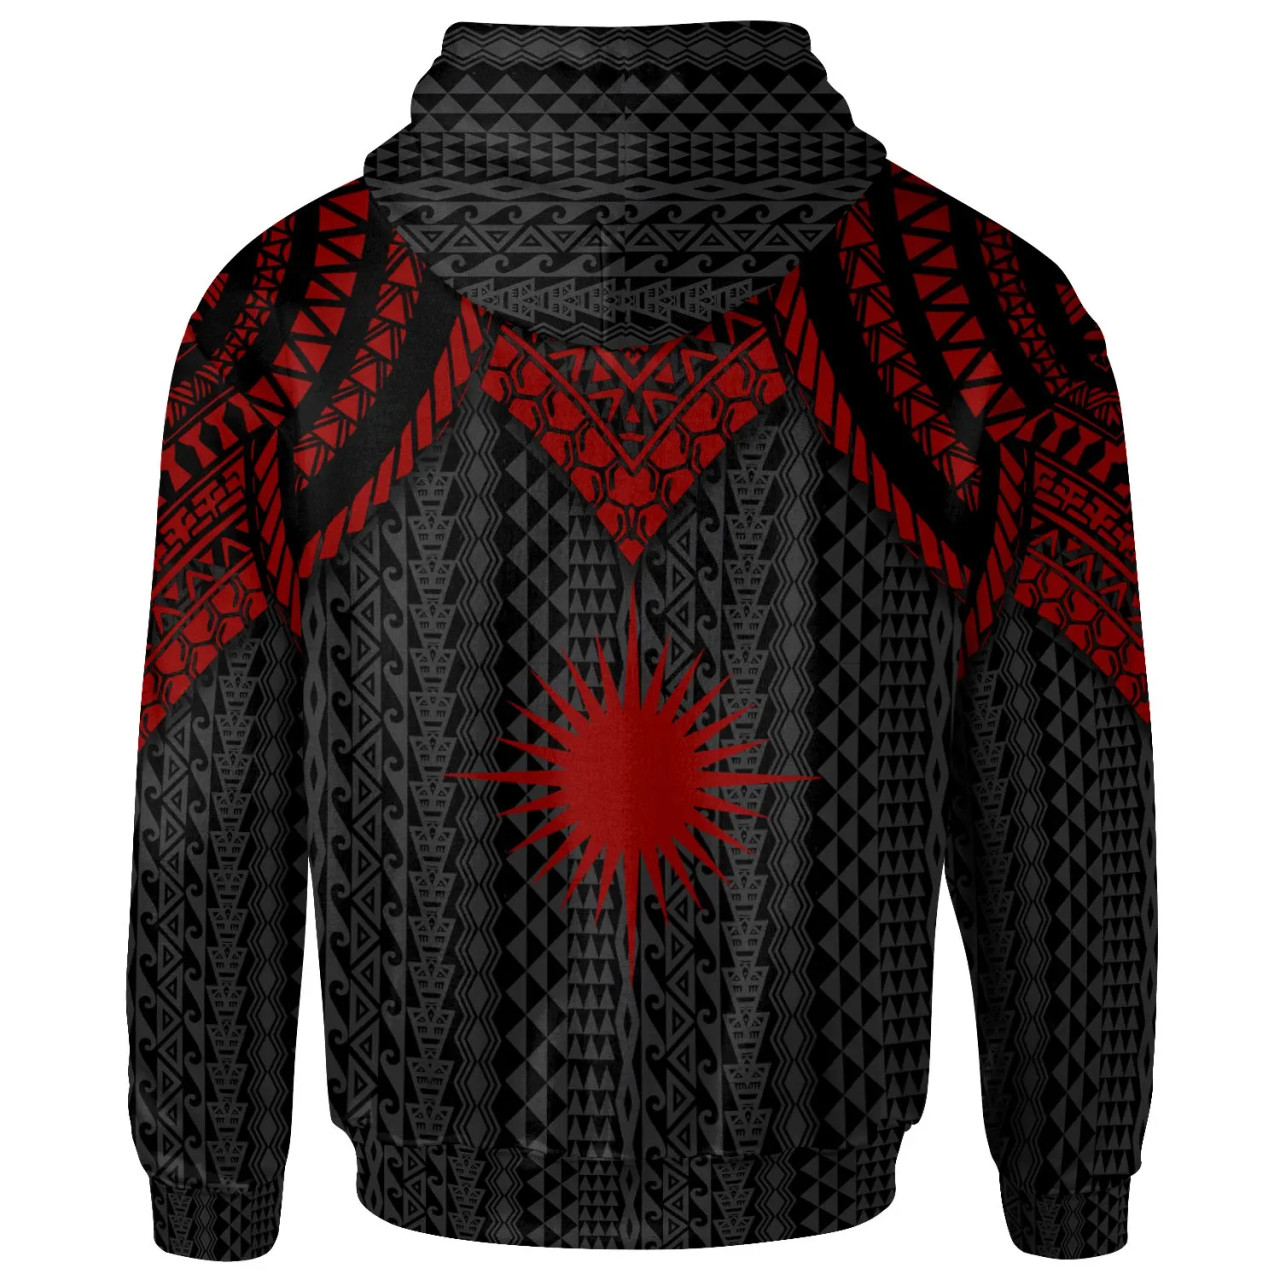 Marshall Islands Hoodie - Polynesian Armor Style Red